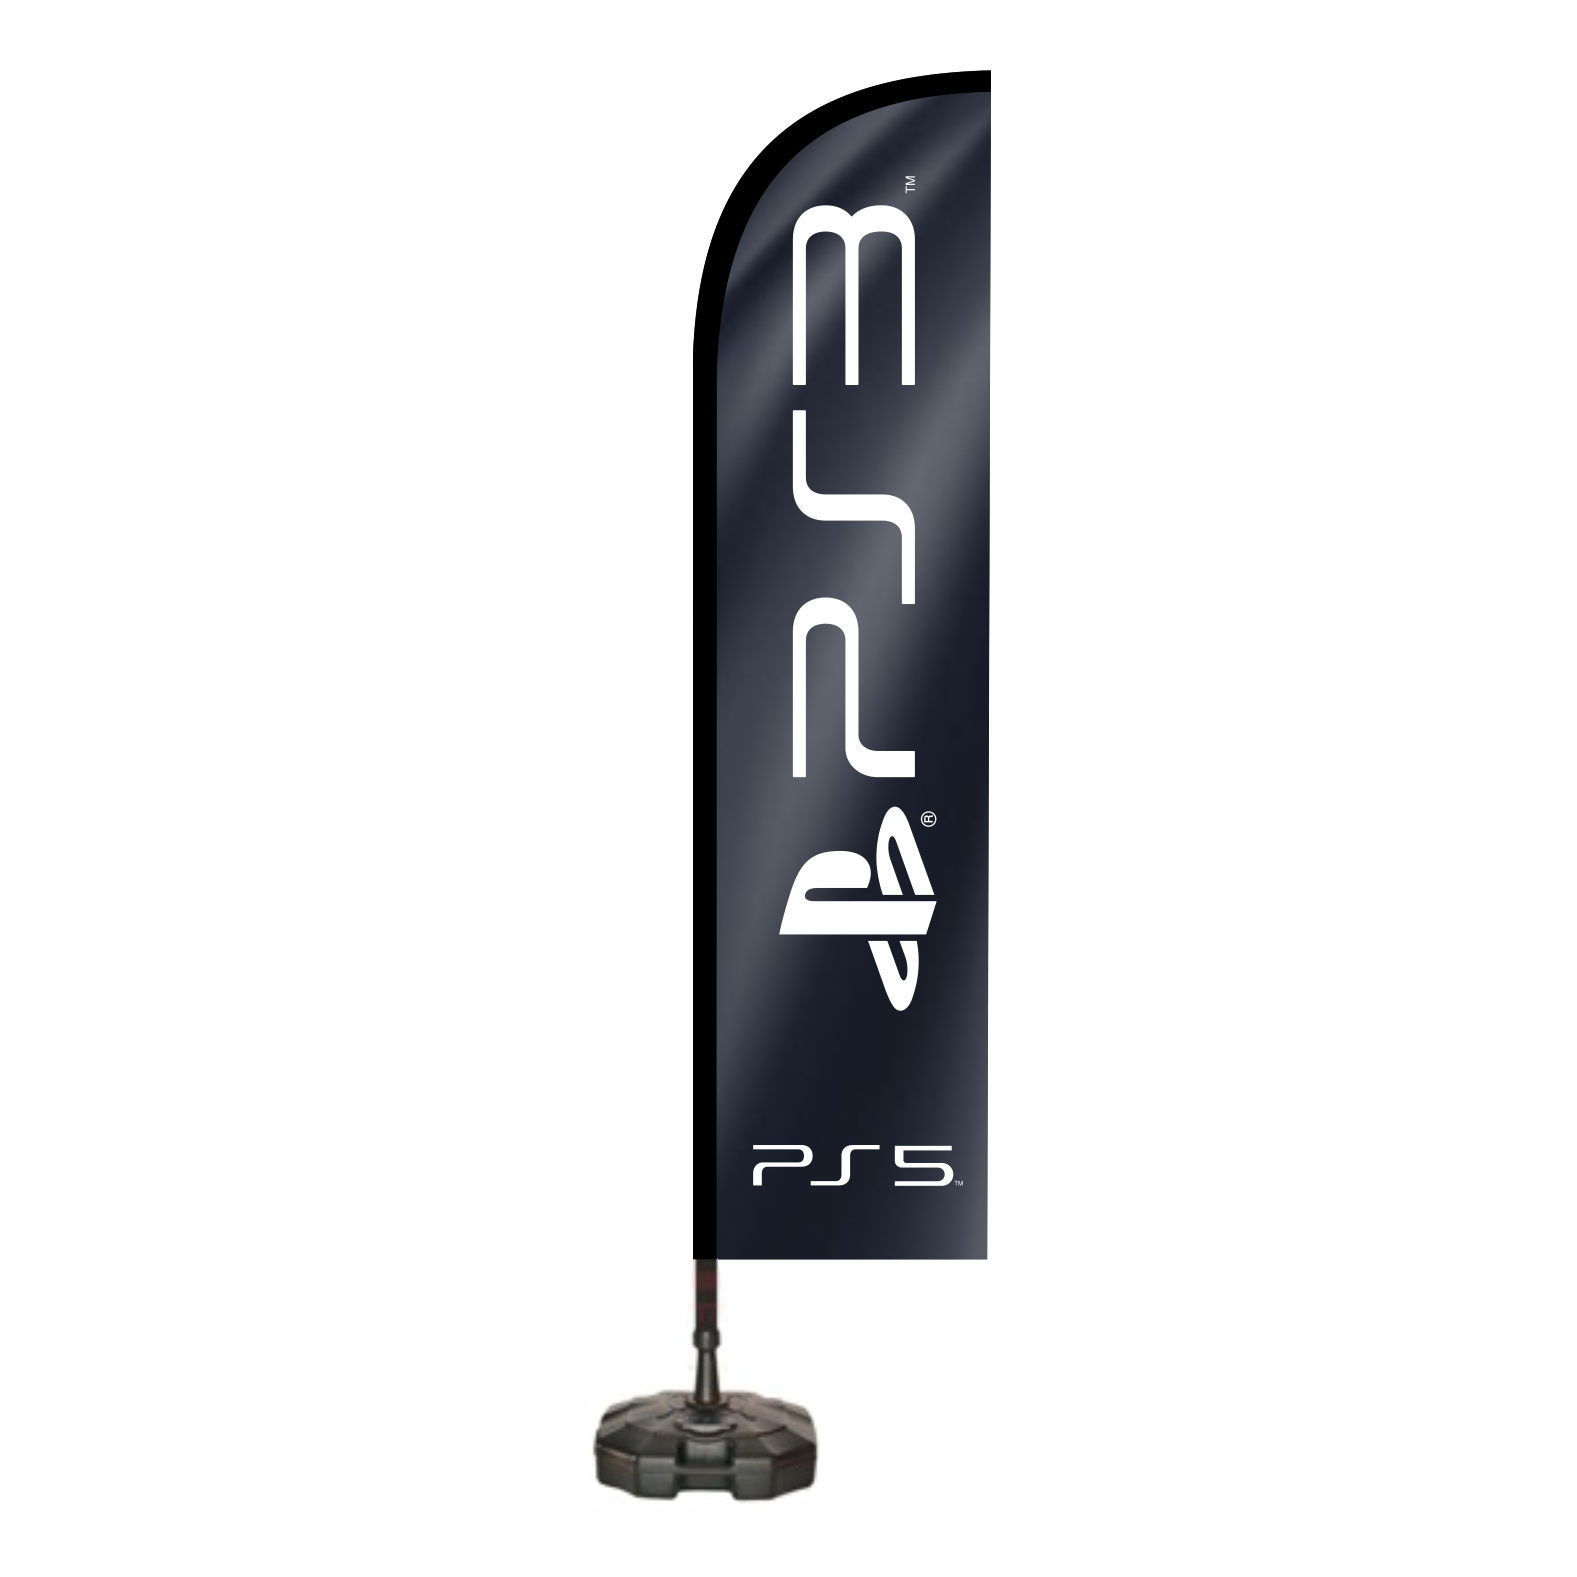 PS3 Dkkan n Bayra Fiyatlar